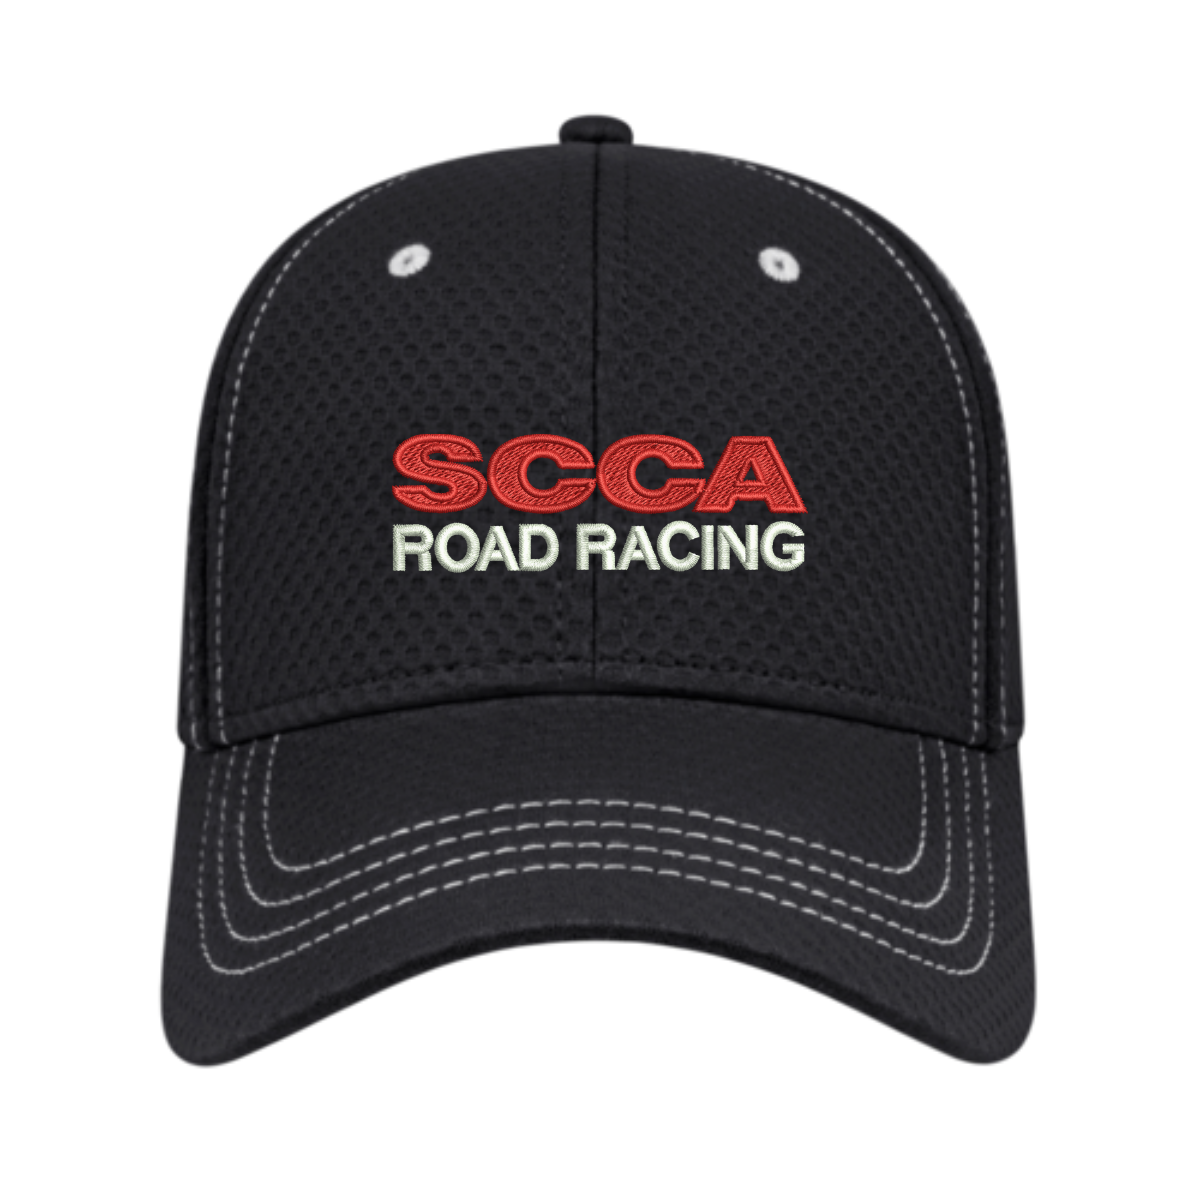 SCCA Road Racing Performance Soft Mesh Cap